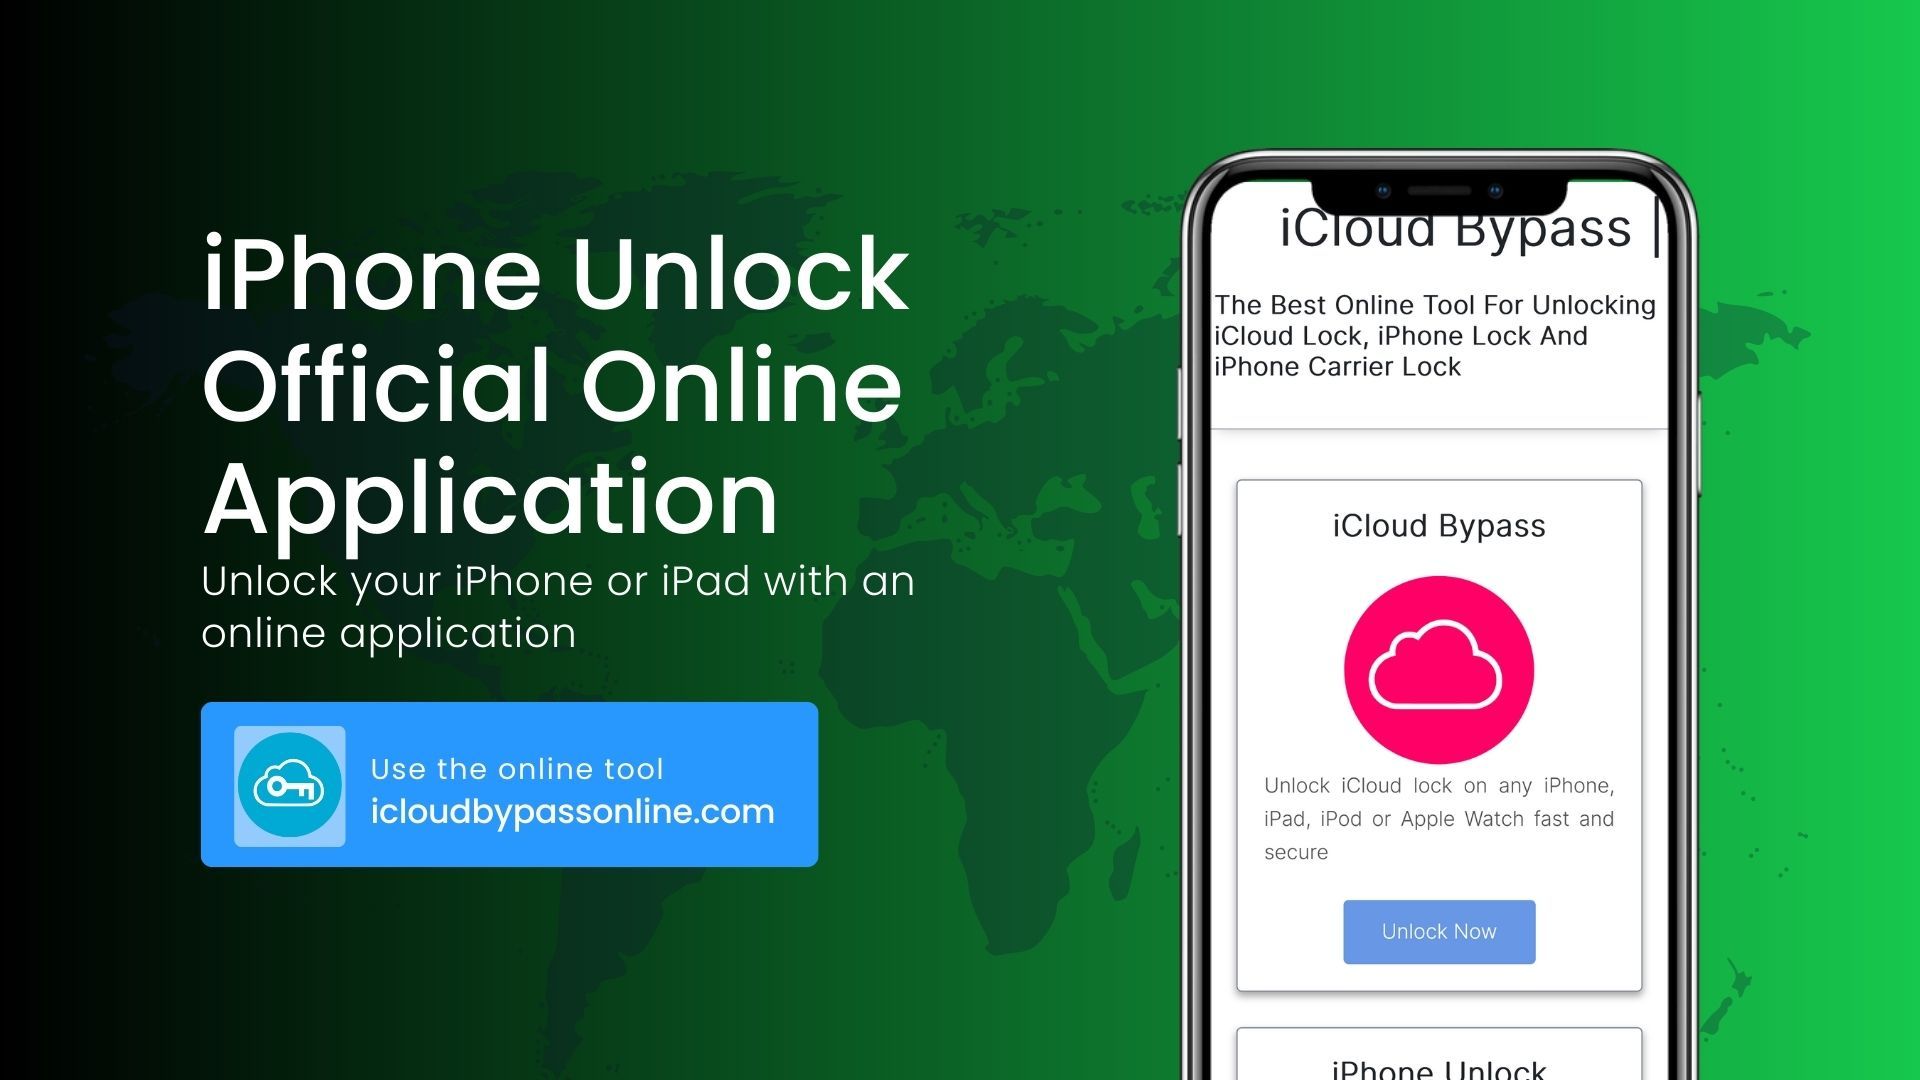 iPhone Unlock Official Online Application
